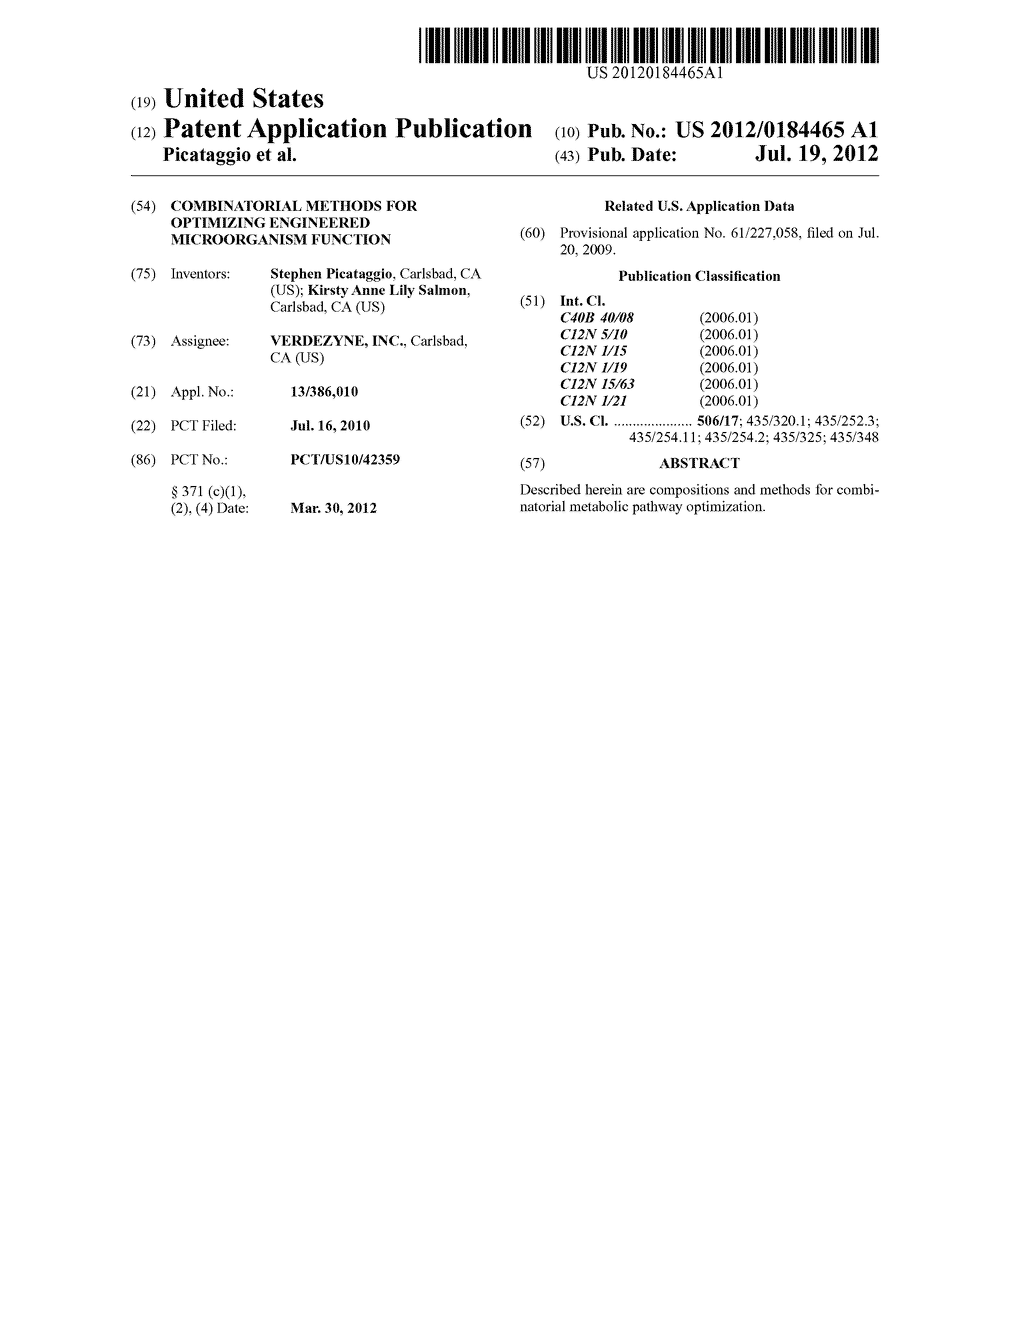 COMBINATORIAL METHODS FOR OPTIMIZING ENGINEERED MICROORGANISM FUNCTION - diagram, schematic, and image 01